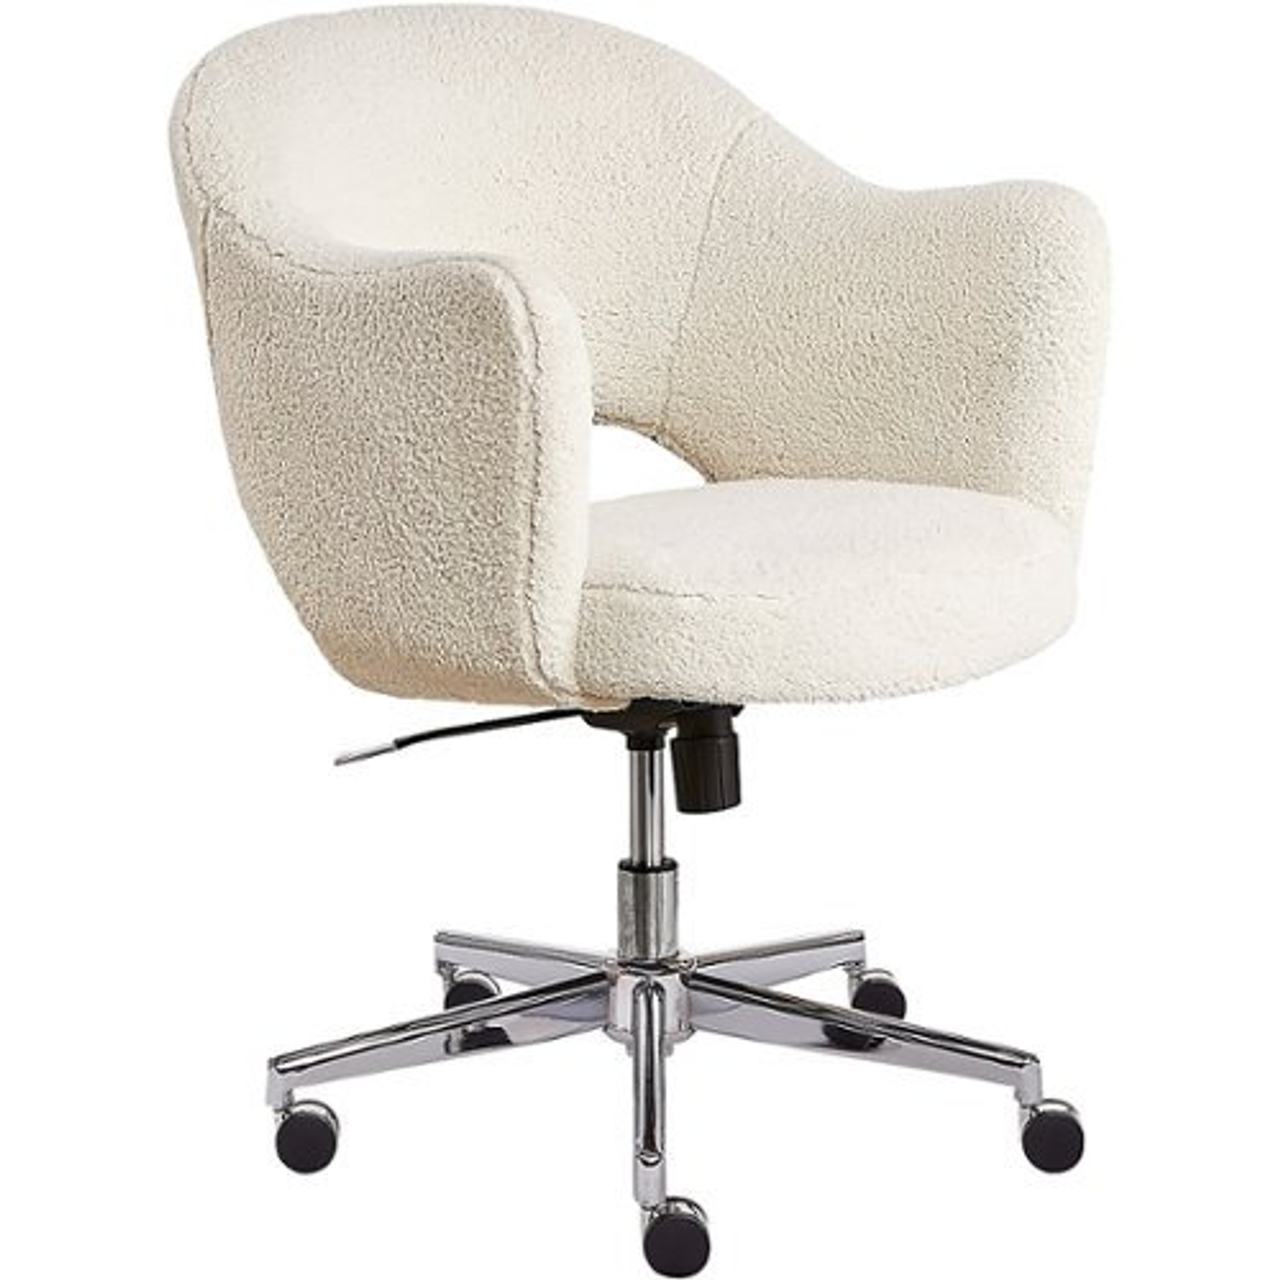 Serta - Valetta Mid-Century Modern Faux Shearling Wool Home Office Chair - Cream